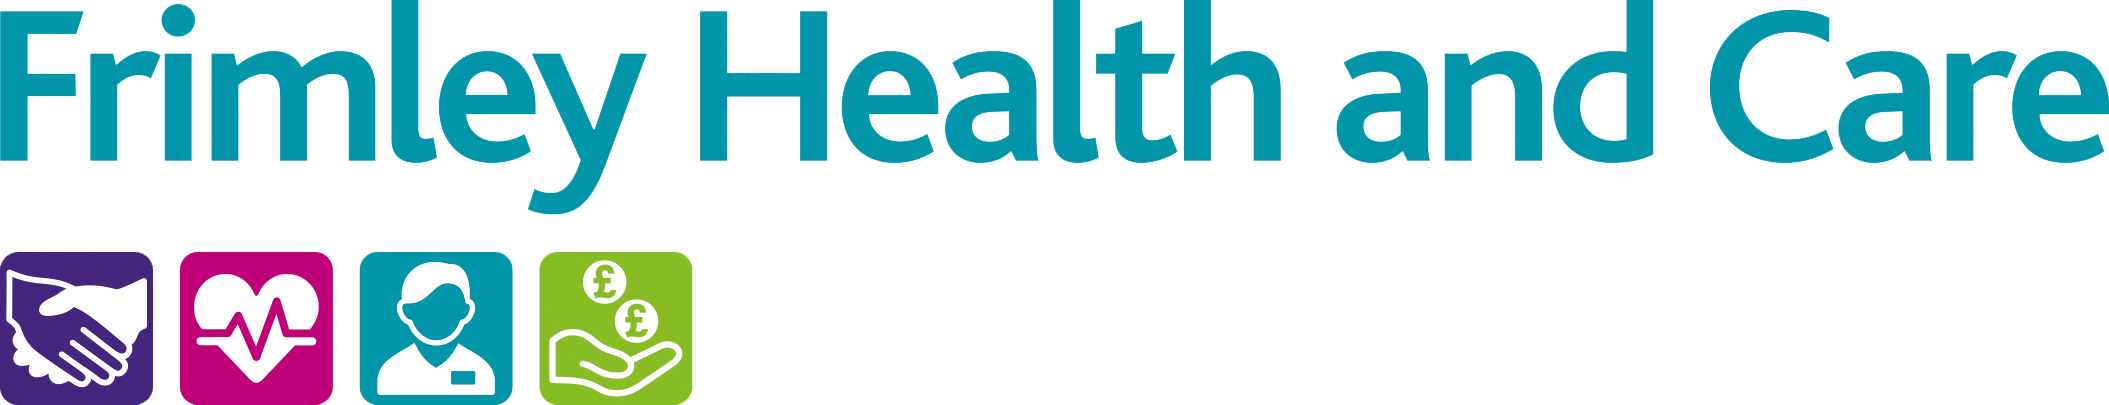 Frimley Health and Care logo